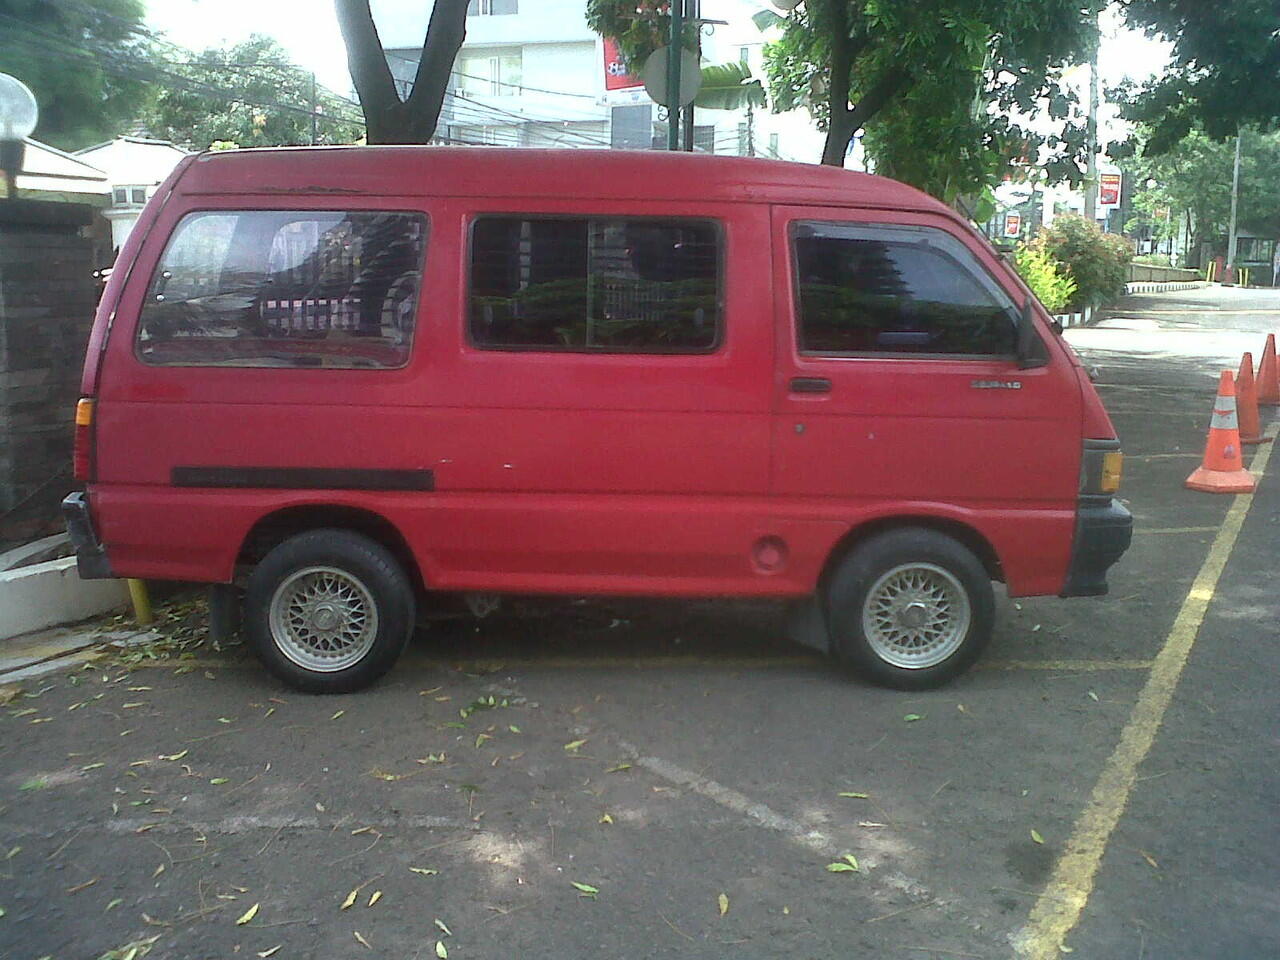 Terjual Daihatsu Zebra Astrea 1000 89 90 Bandung KASKUS